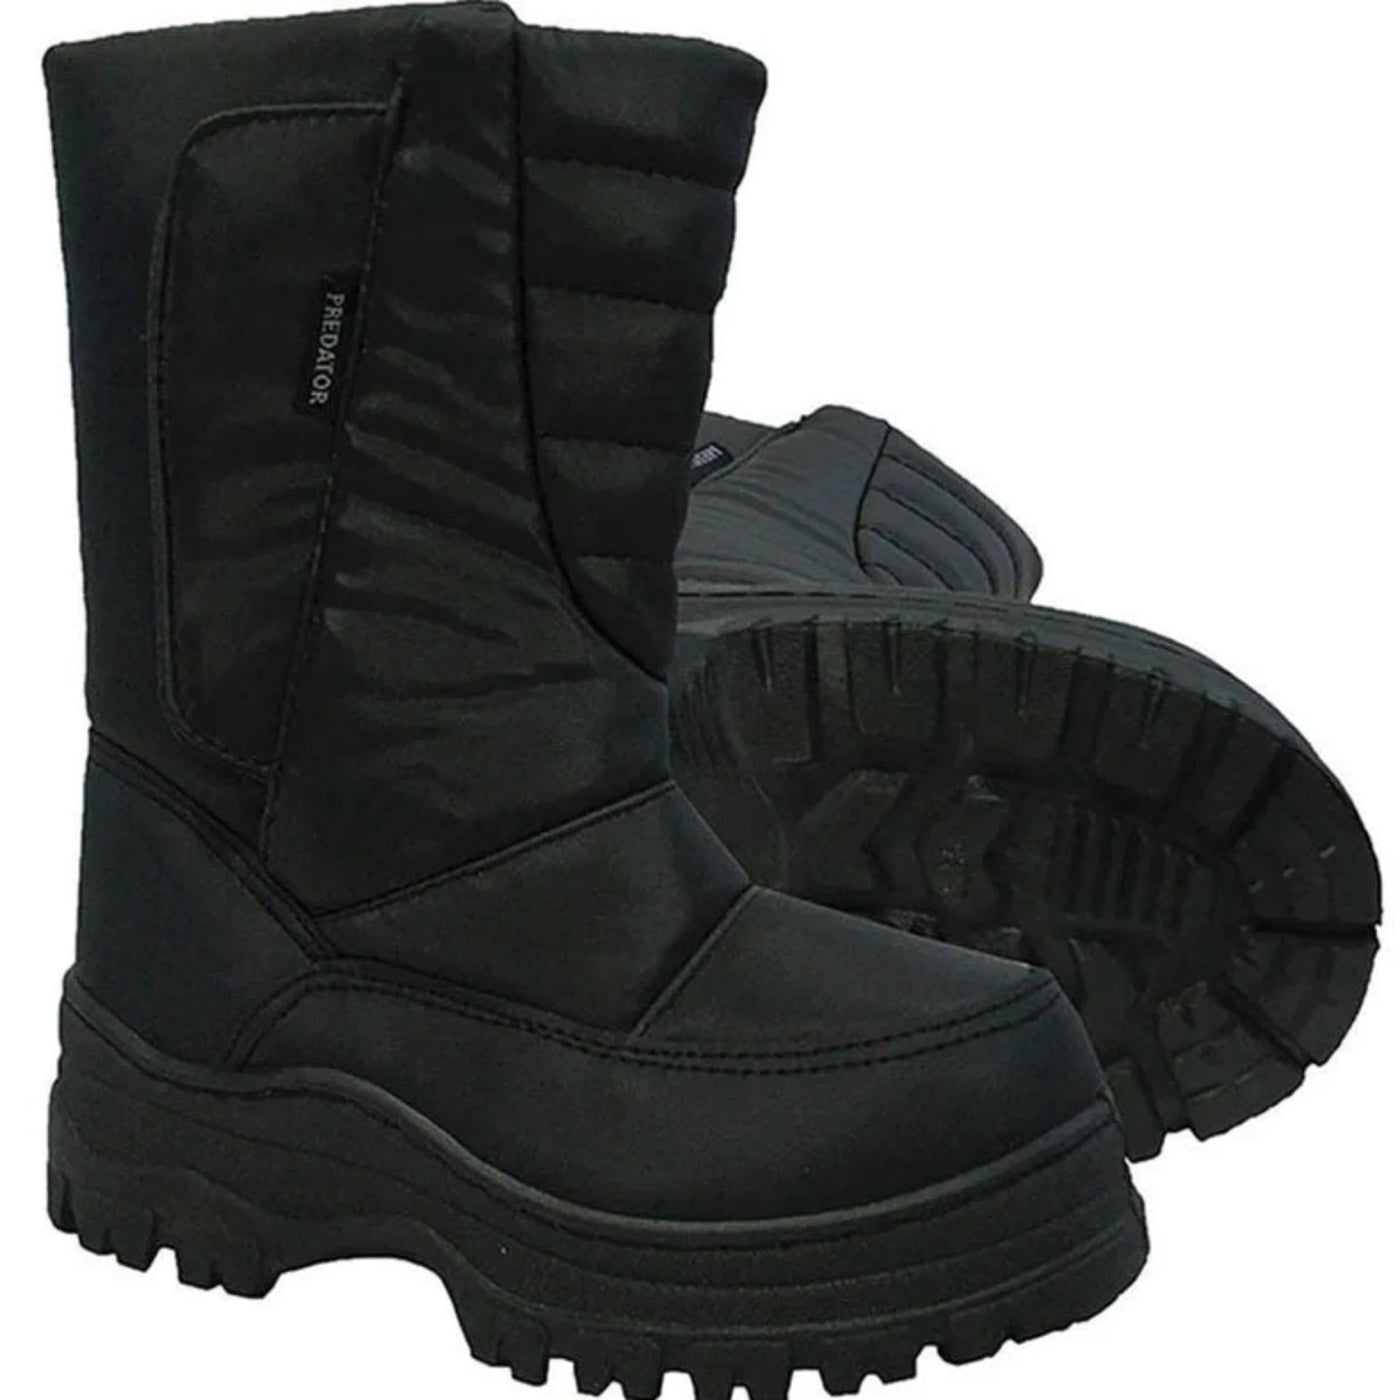 XTM Women's Predator Snow Boots - Black